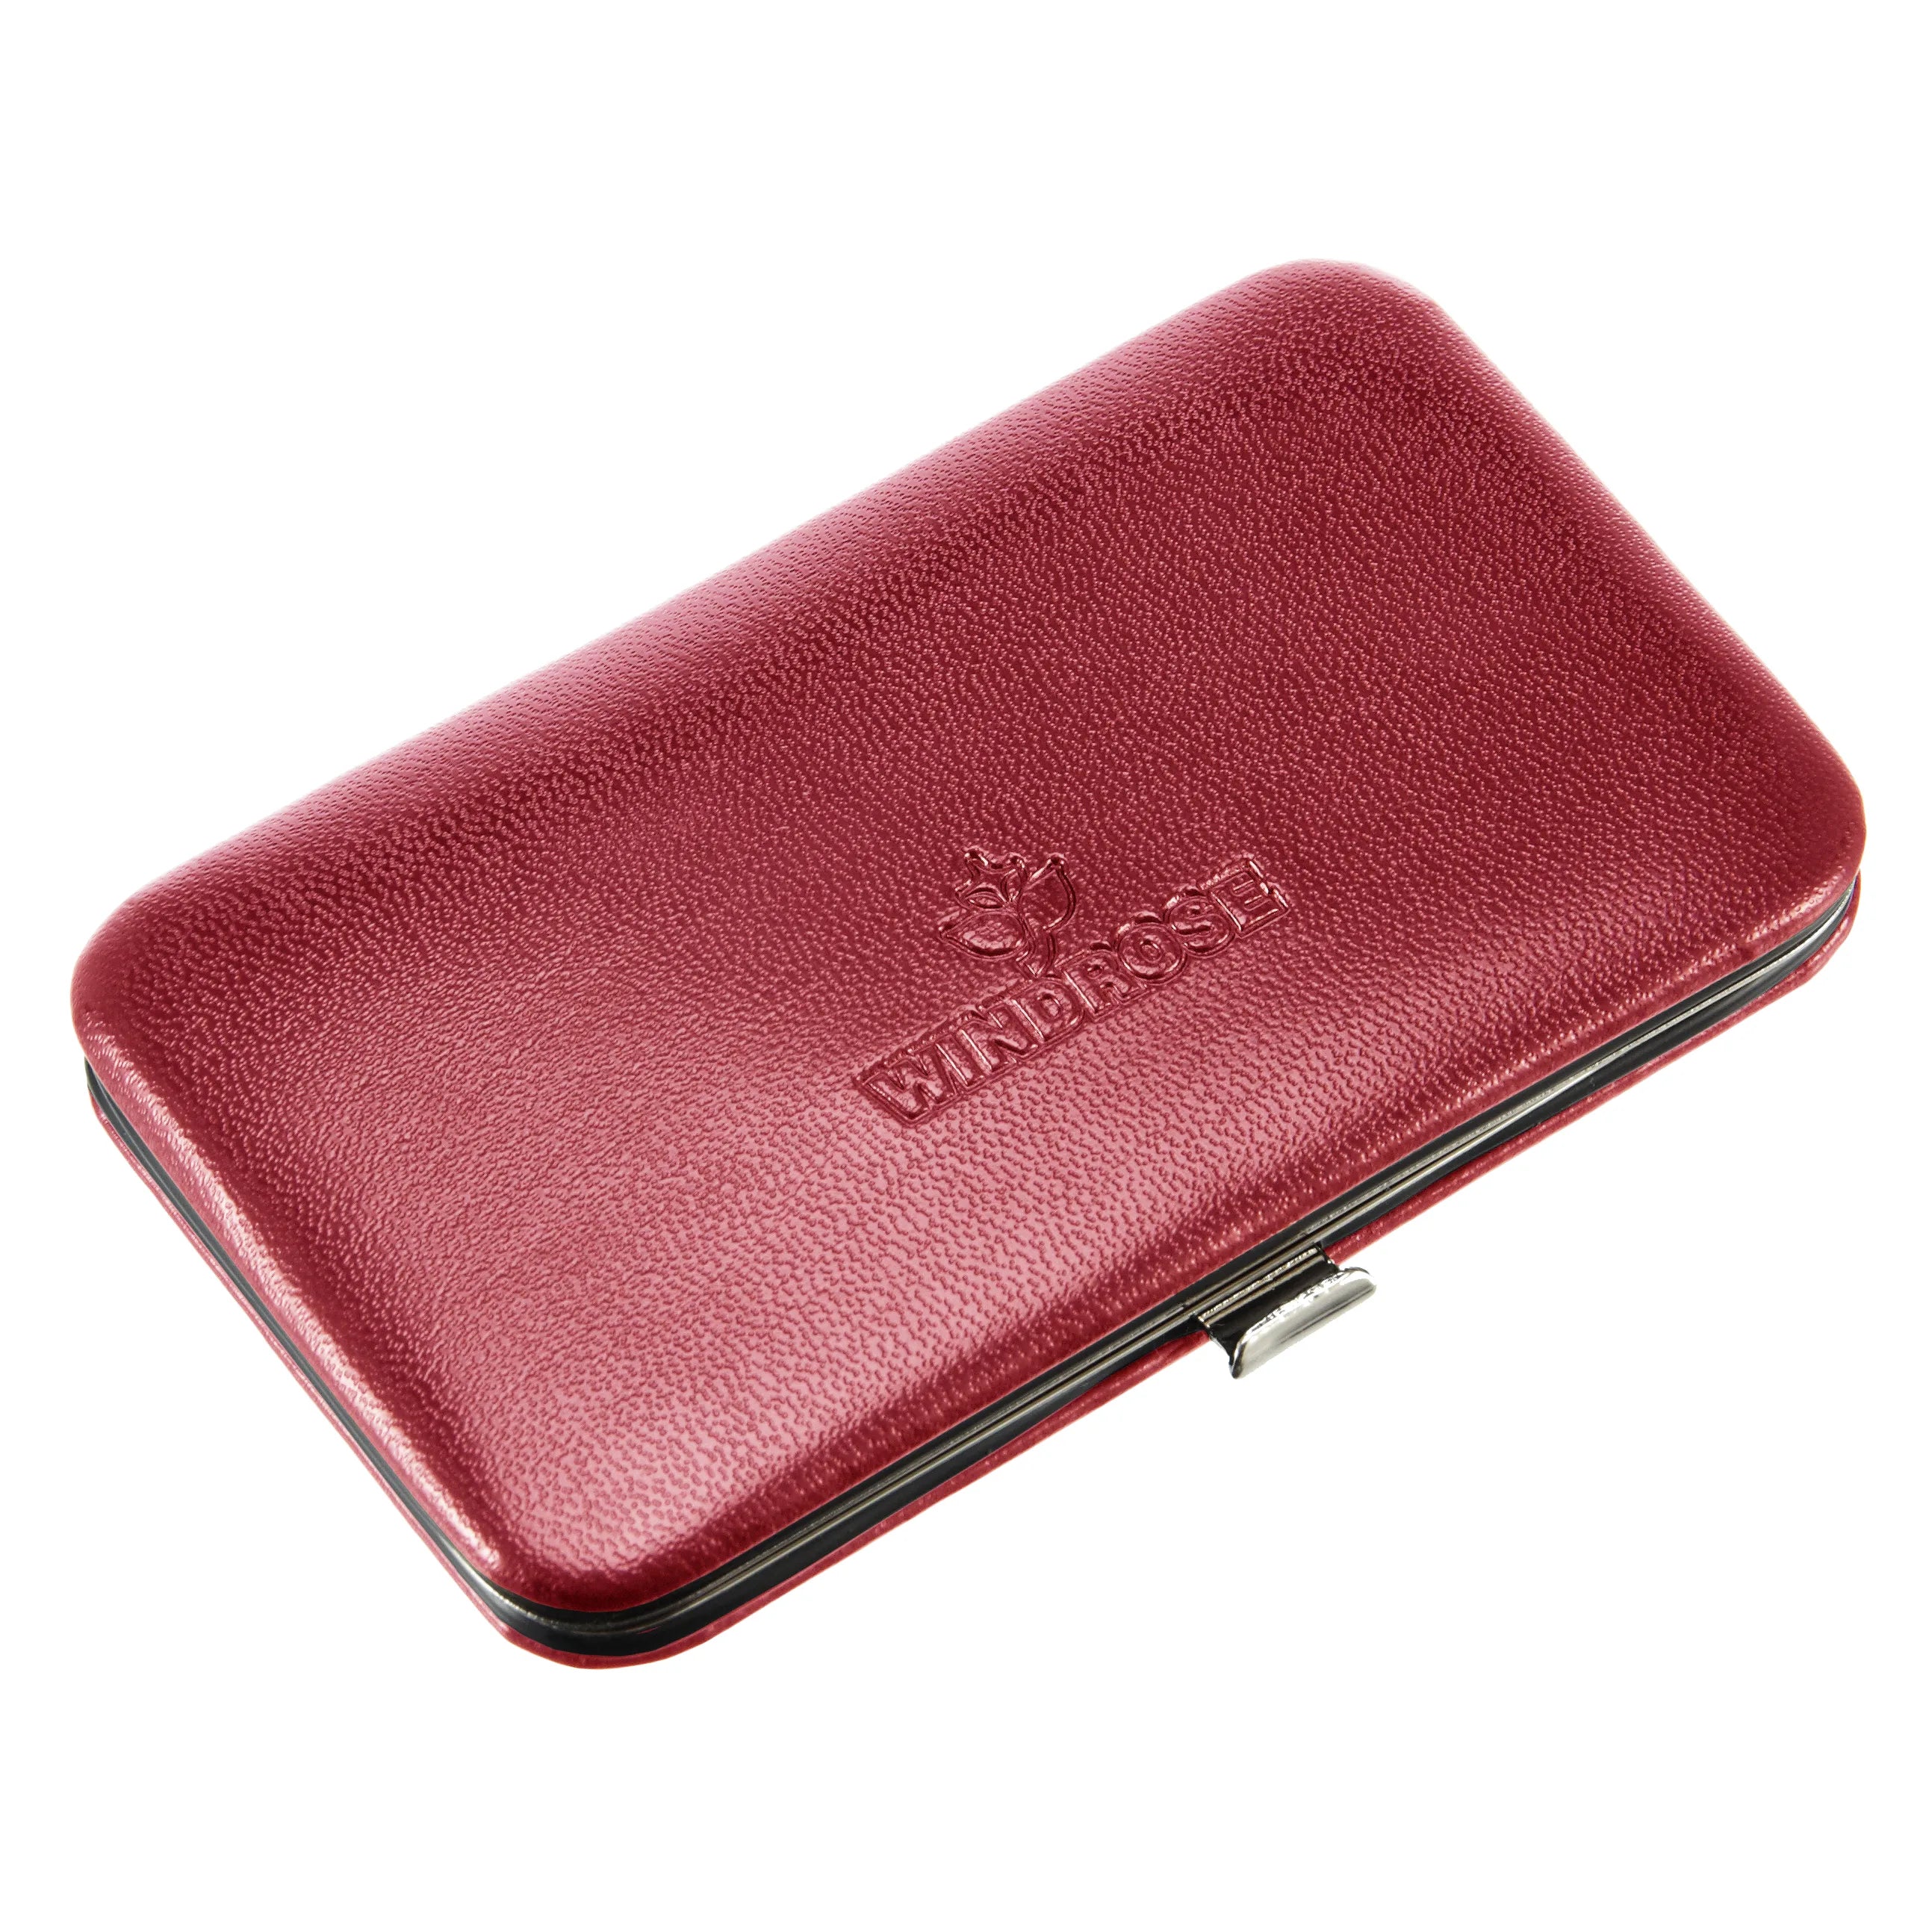 Windrose Merino Manicure ironing case 11 cm - red